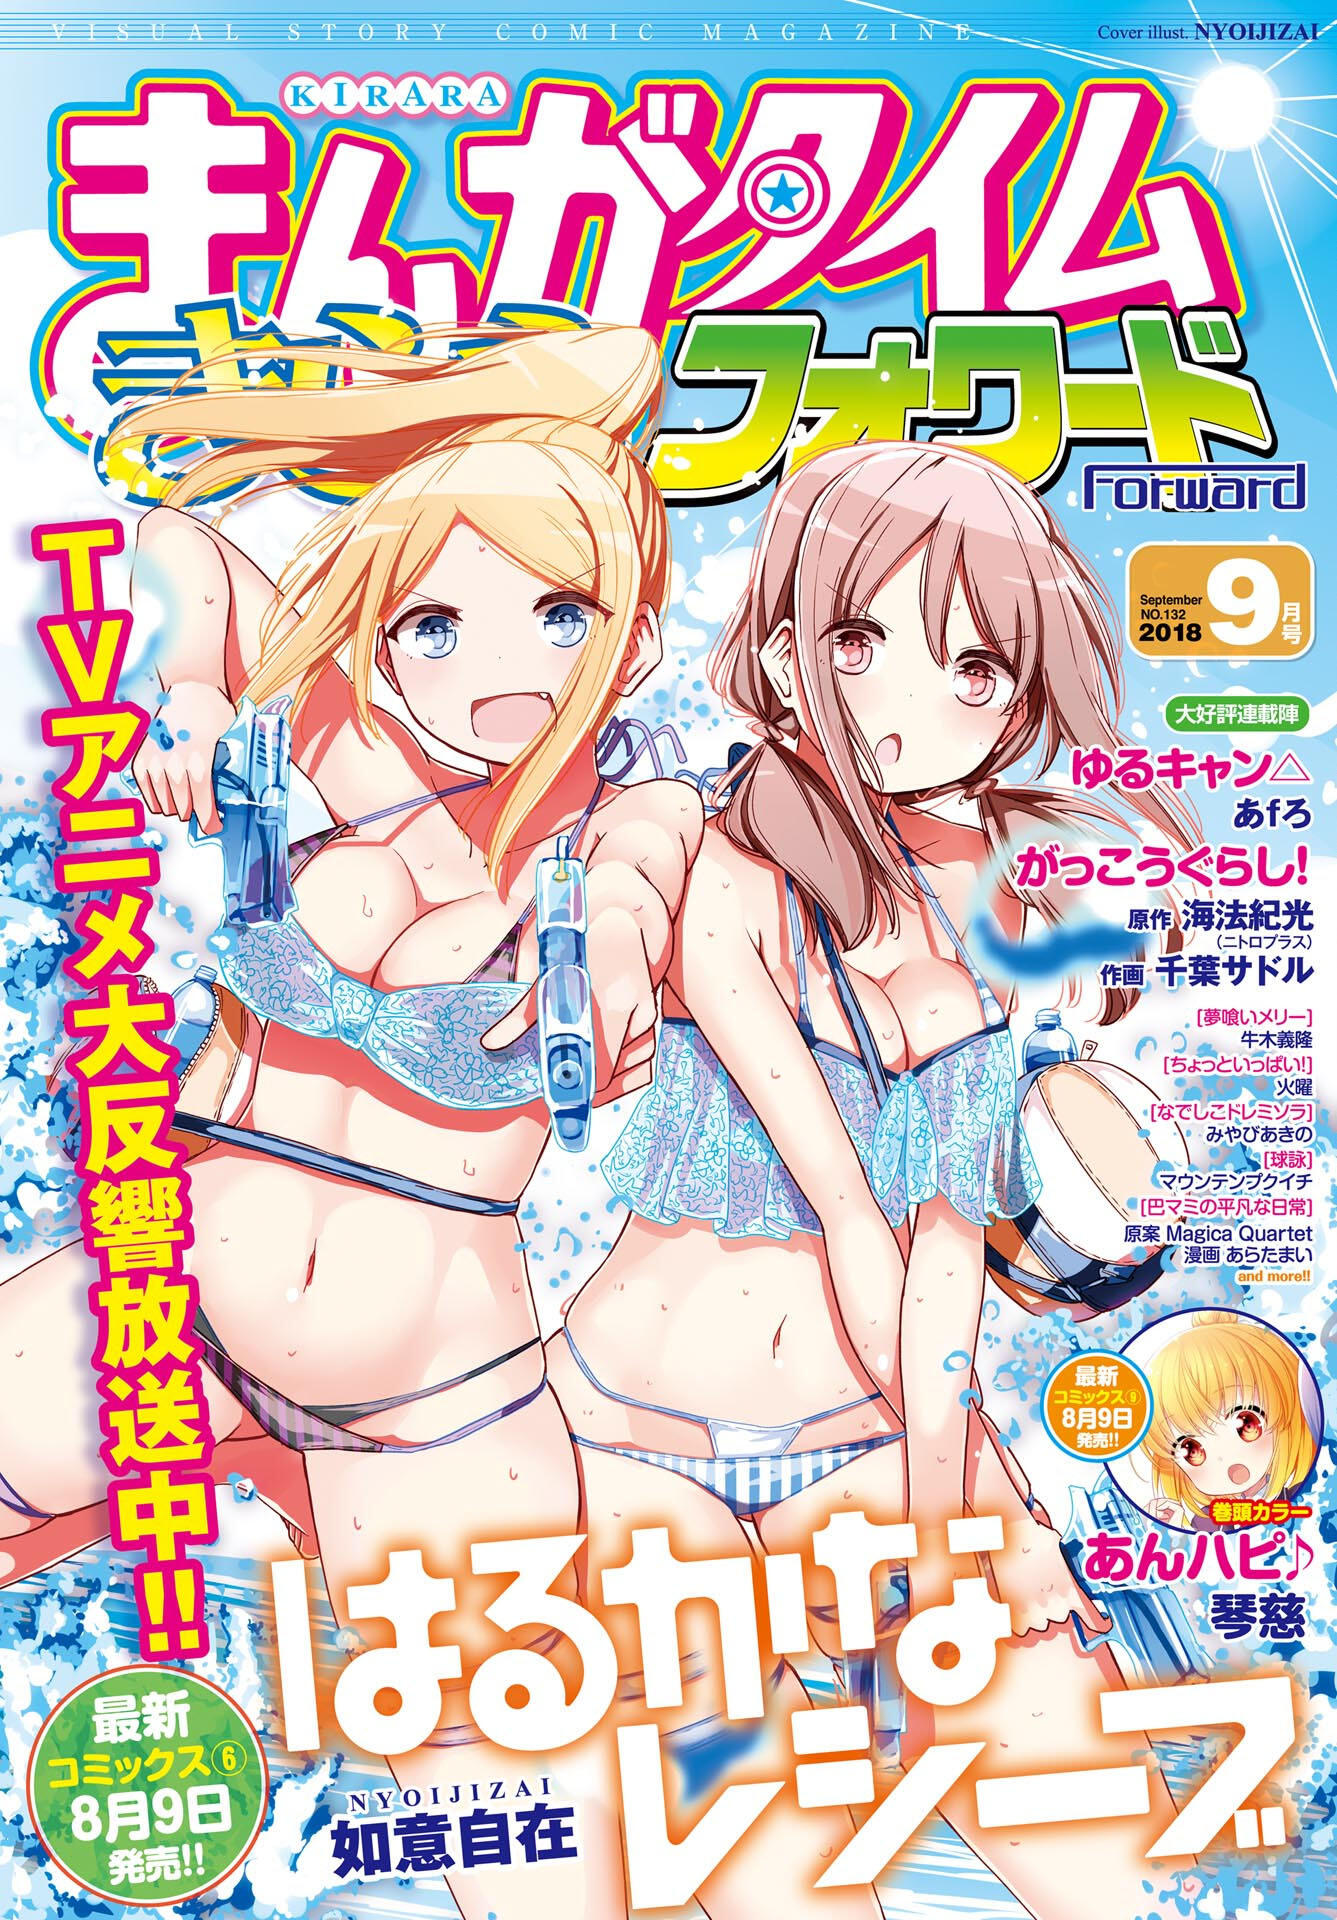 Harukana Receive Manga Volume 3